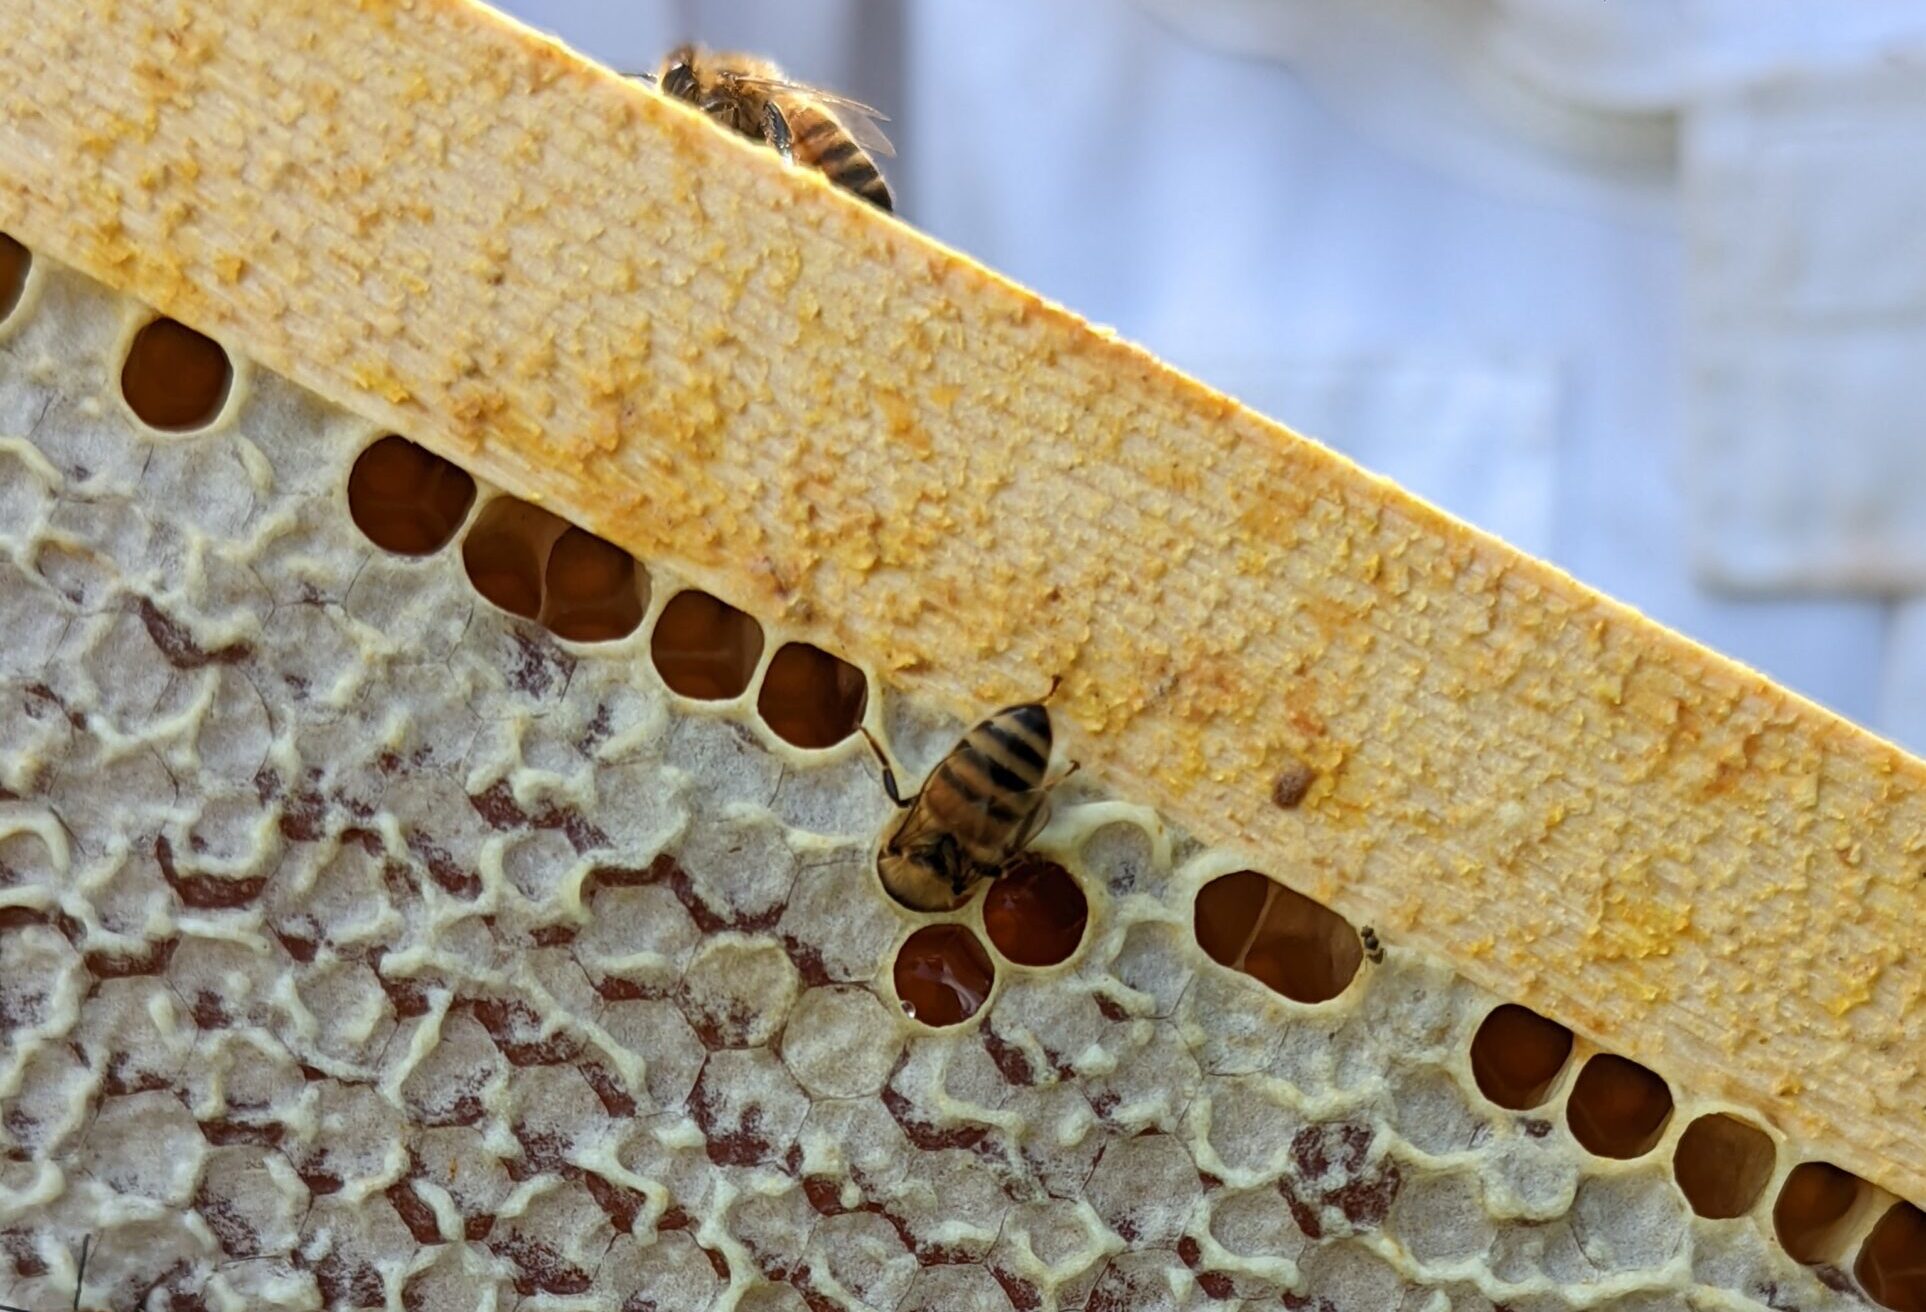 Missouri Pollinators are the Bee’s Knees